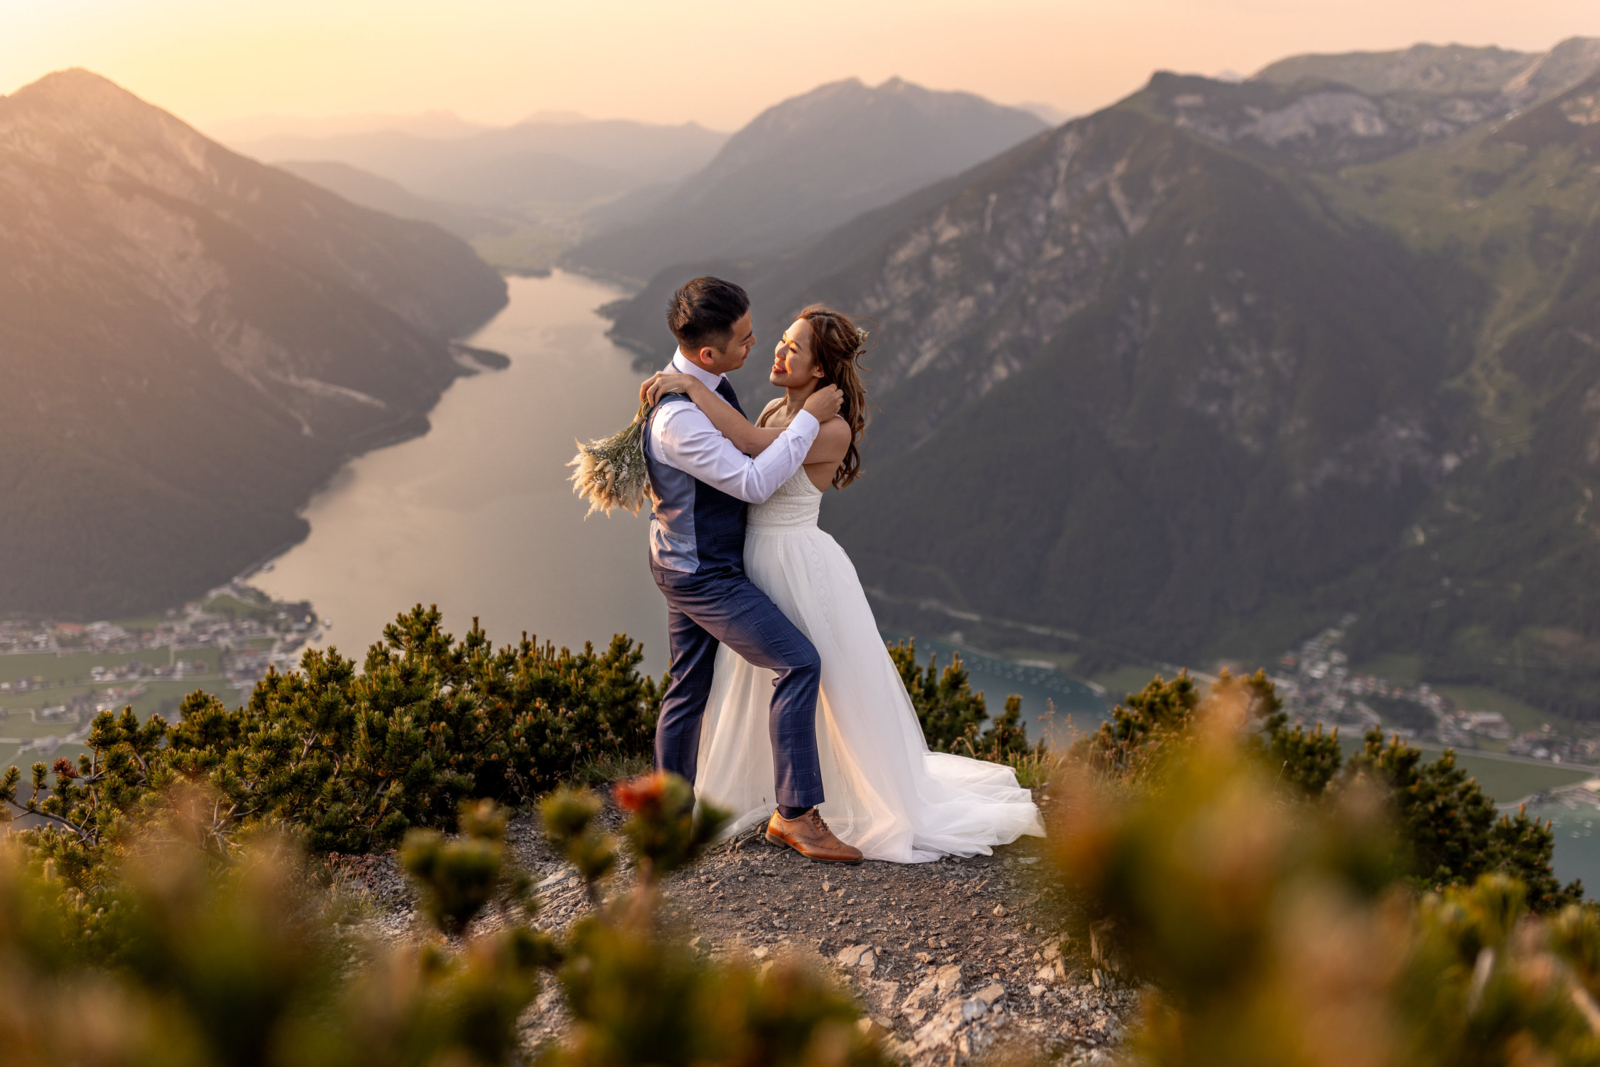 wedding photos in the mountains in austria